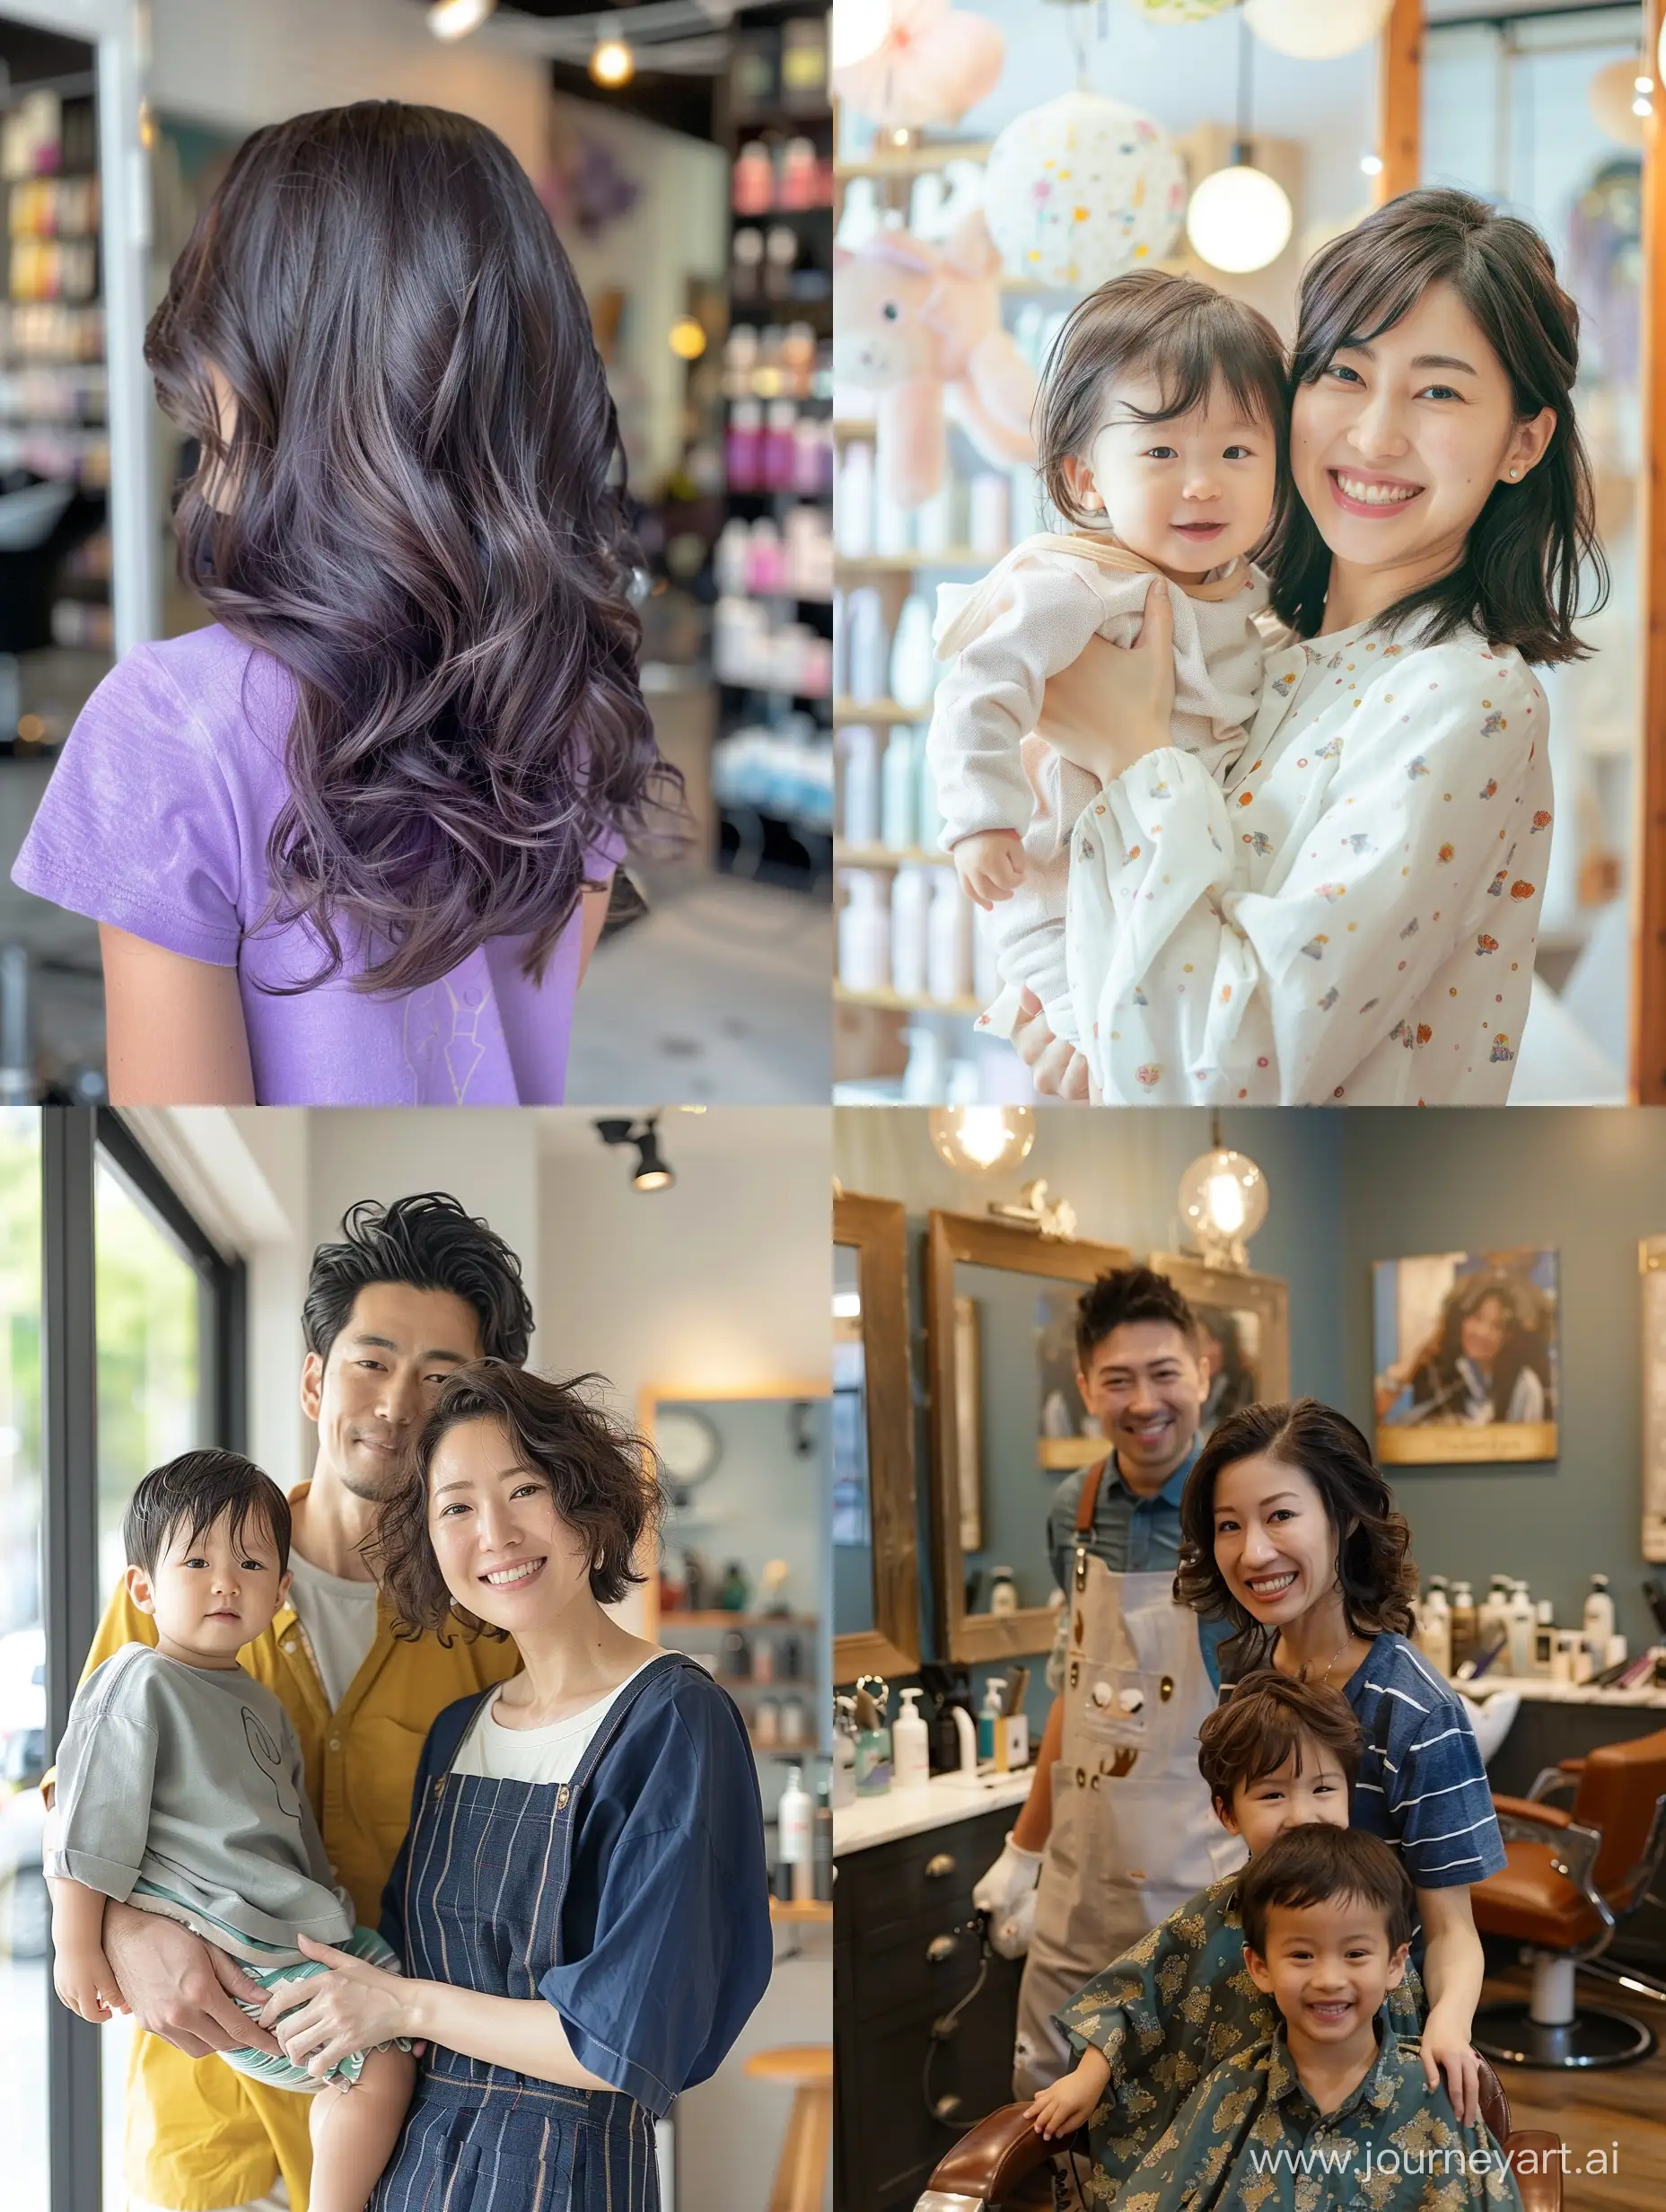 Heartwarming-Family-Hair-Salon-Creating-Beauty-with-Love